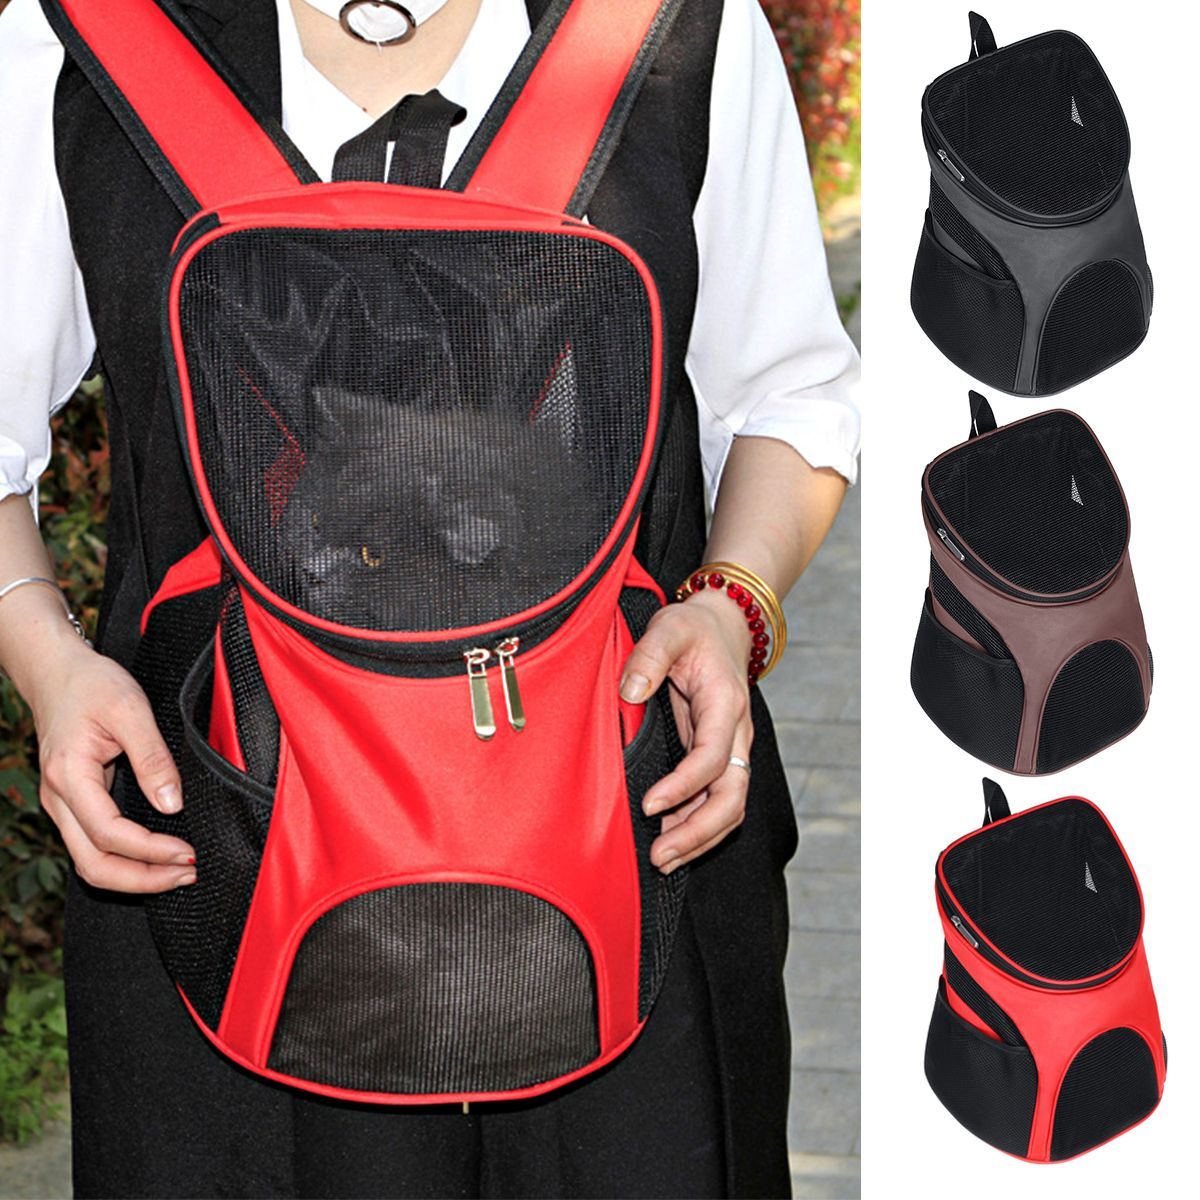 Portable-Cat-Dog-Pet-Double-Shoulder-Mesh-Bag-Backpack-Travel-Carrier-Case-Pouch-1568809